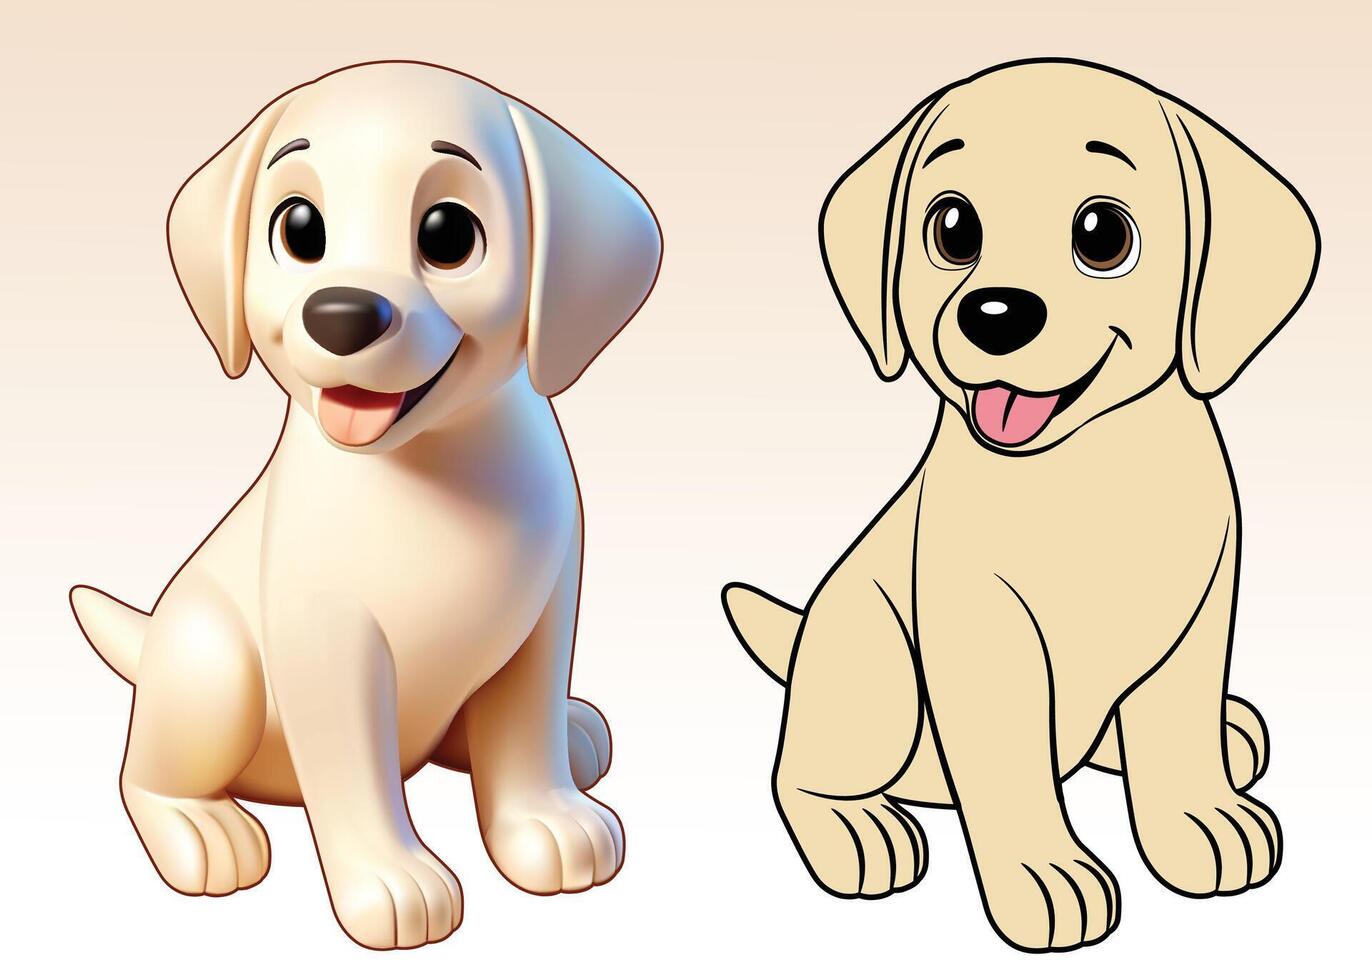 Labrador retriever cartoon smiling 3D and 2D style vector